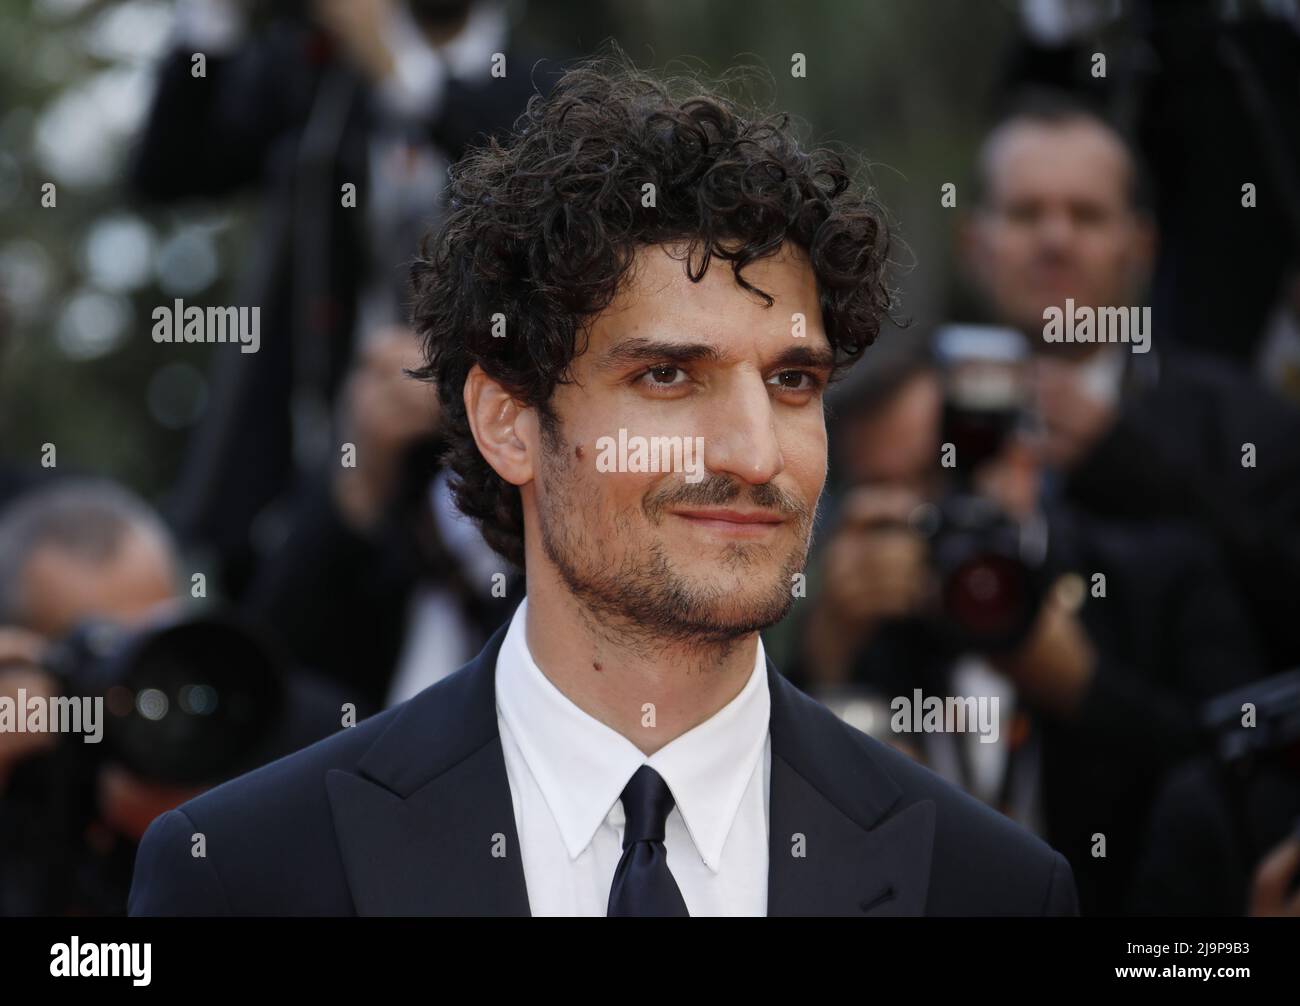 Cannes Review : Louis Garrel Comedy 'The Innocent' – Deadline